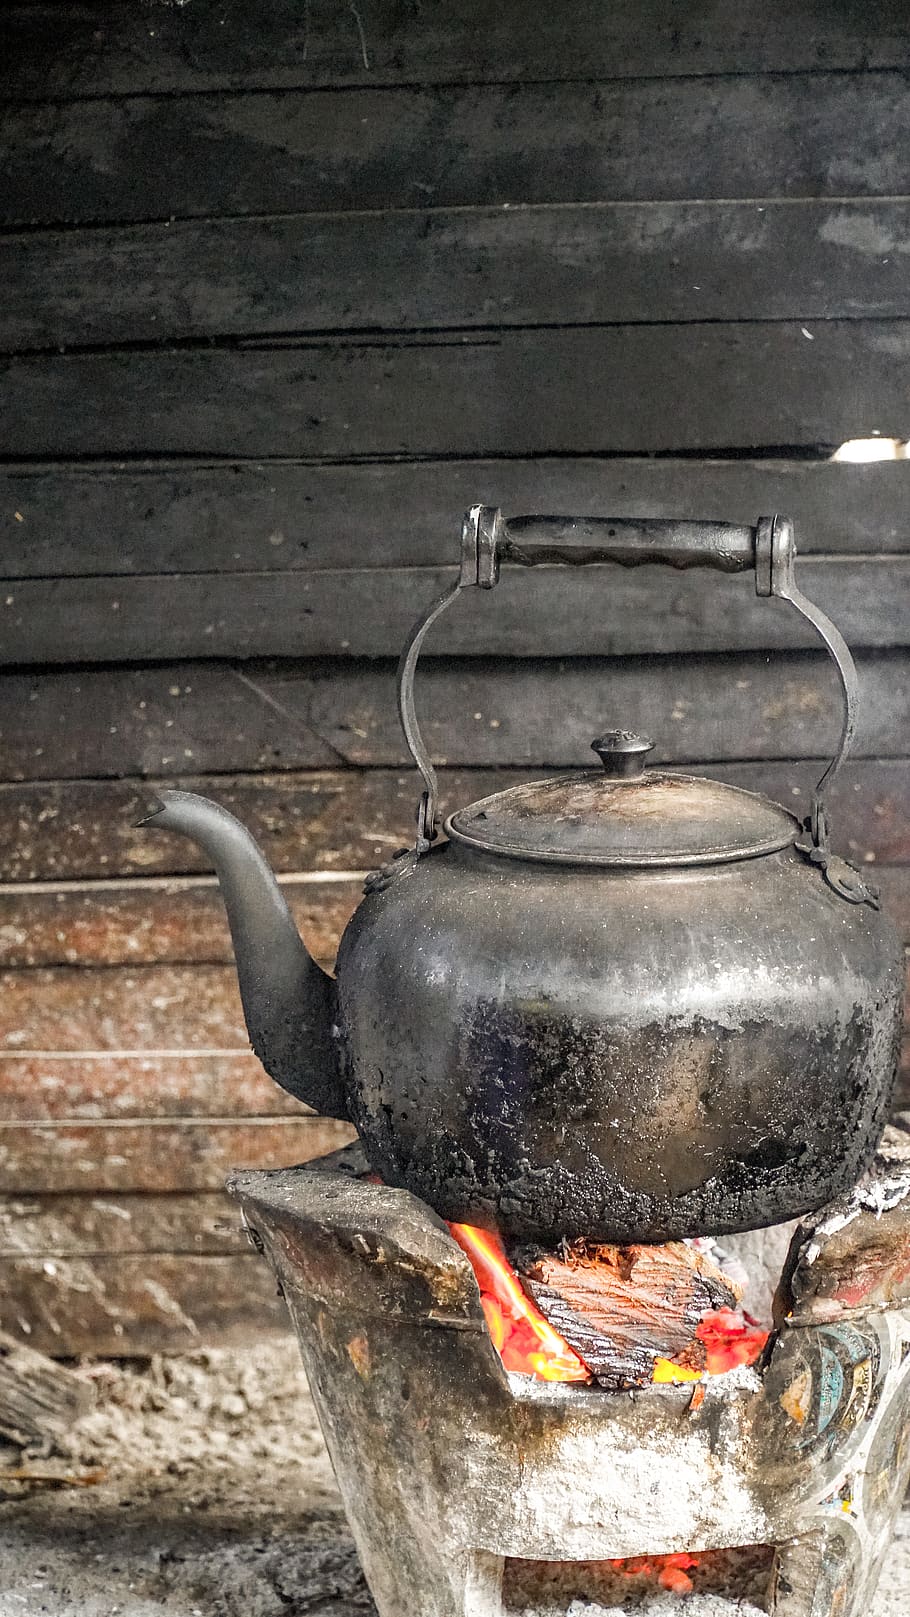 https://c0.wallpaperflare.com/preview/381/301/314/kettle-pot-pottery-fire.jpg